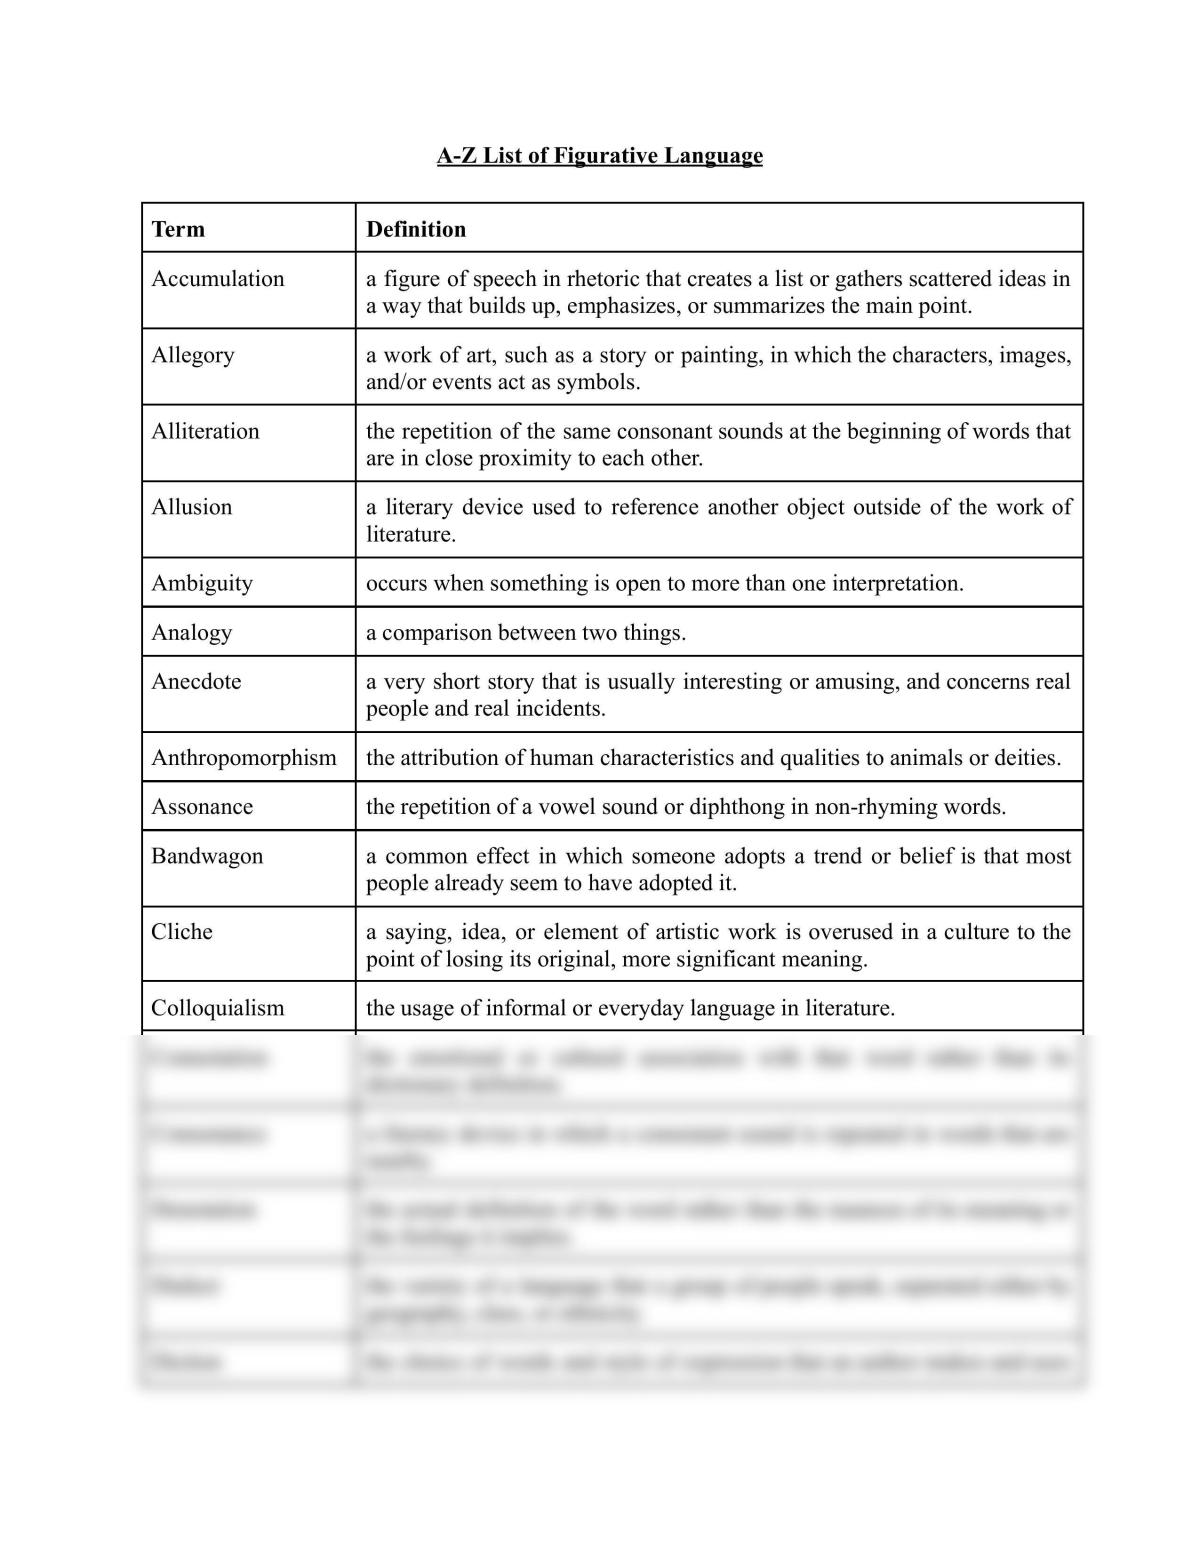 A-Z List of Figurative Language - Page 1